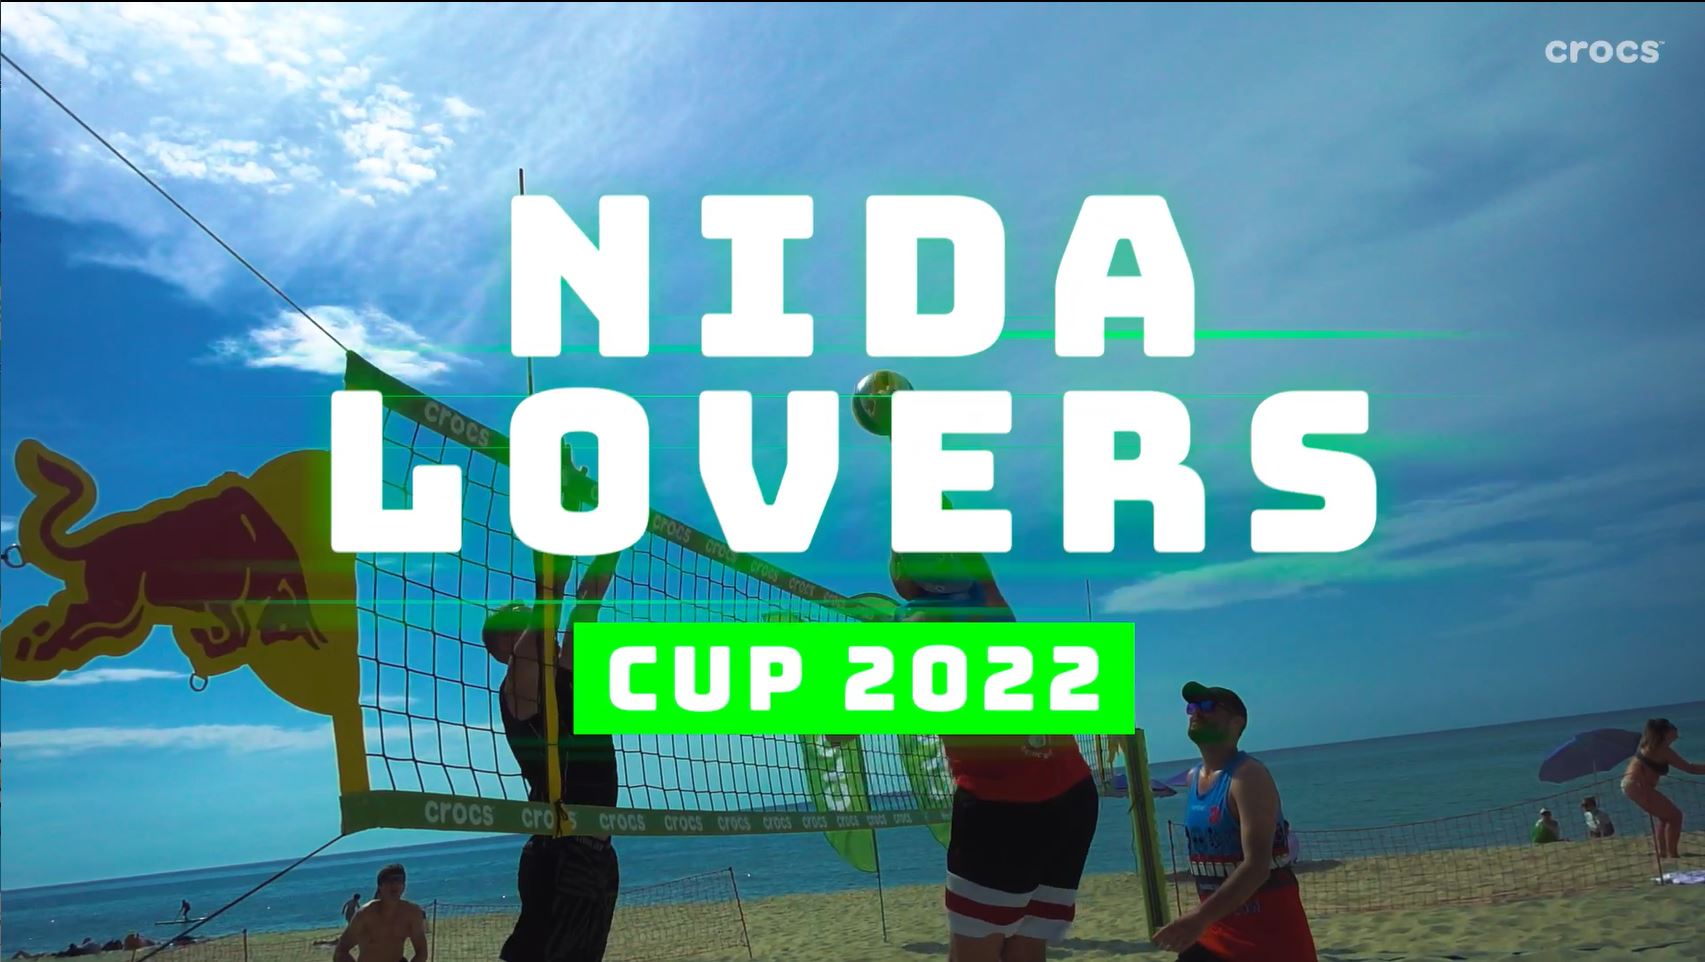 NIda lovers cup 2022